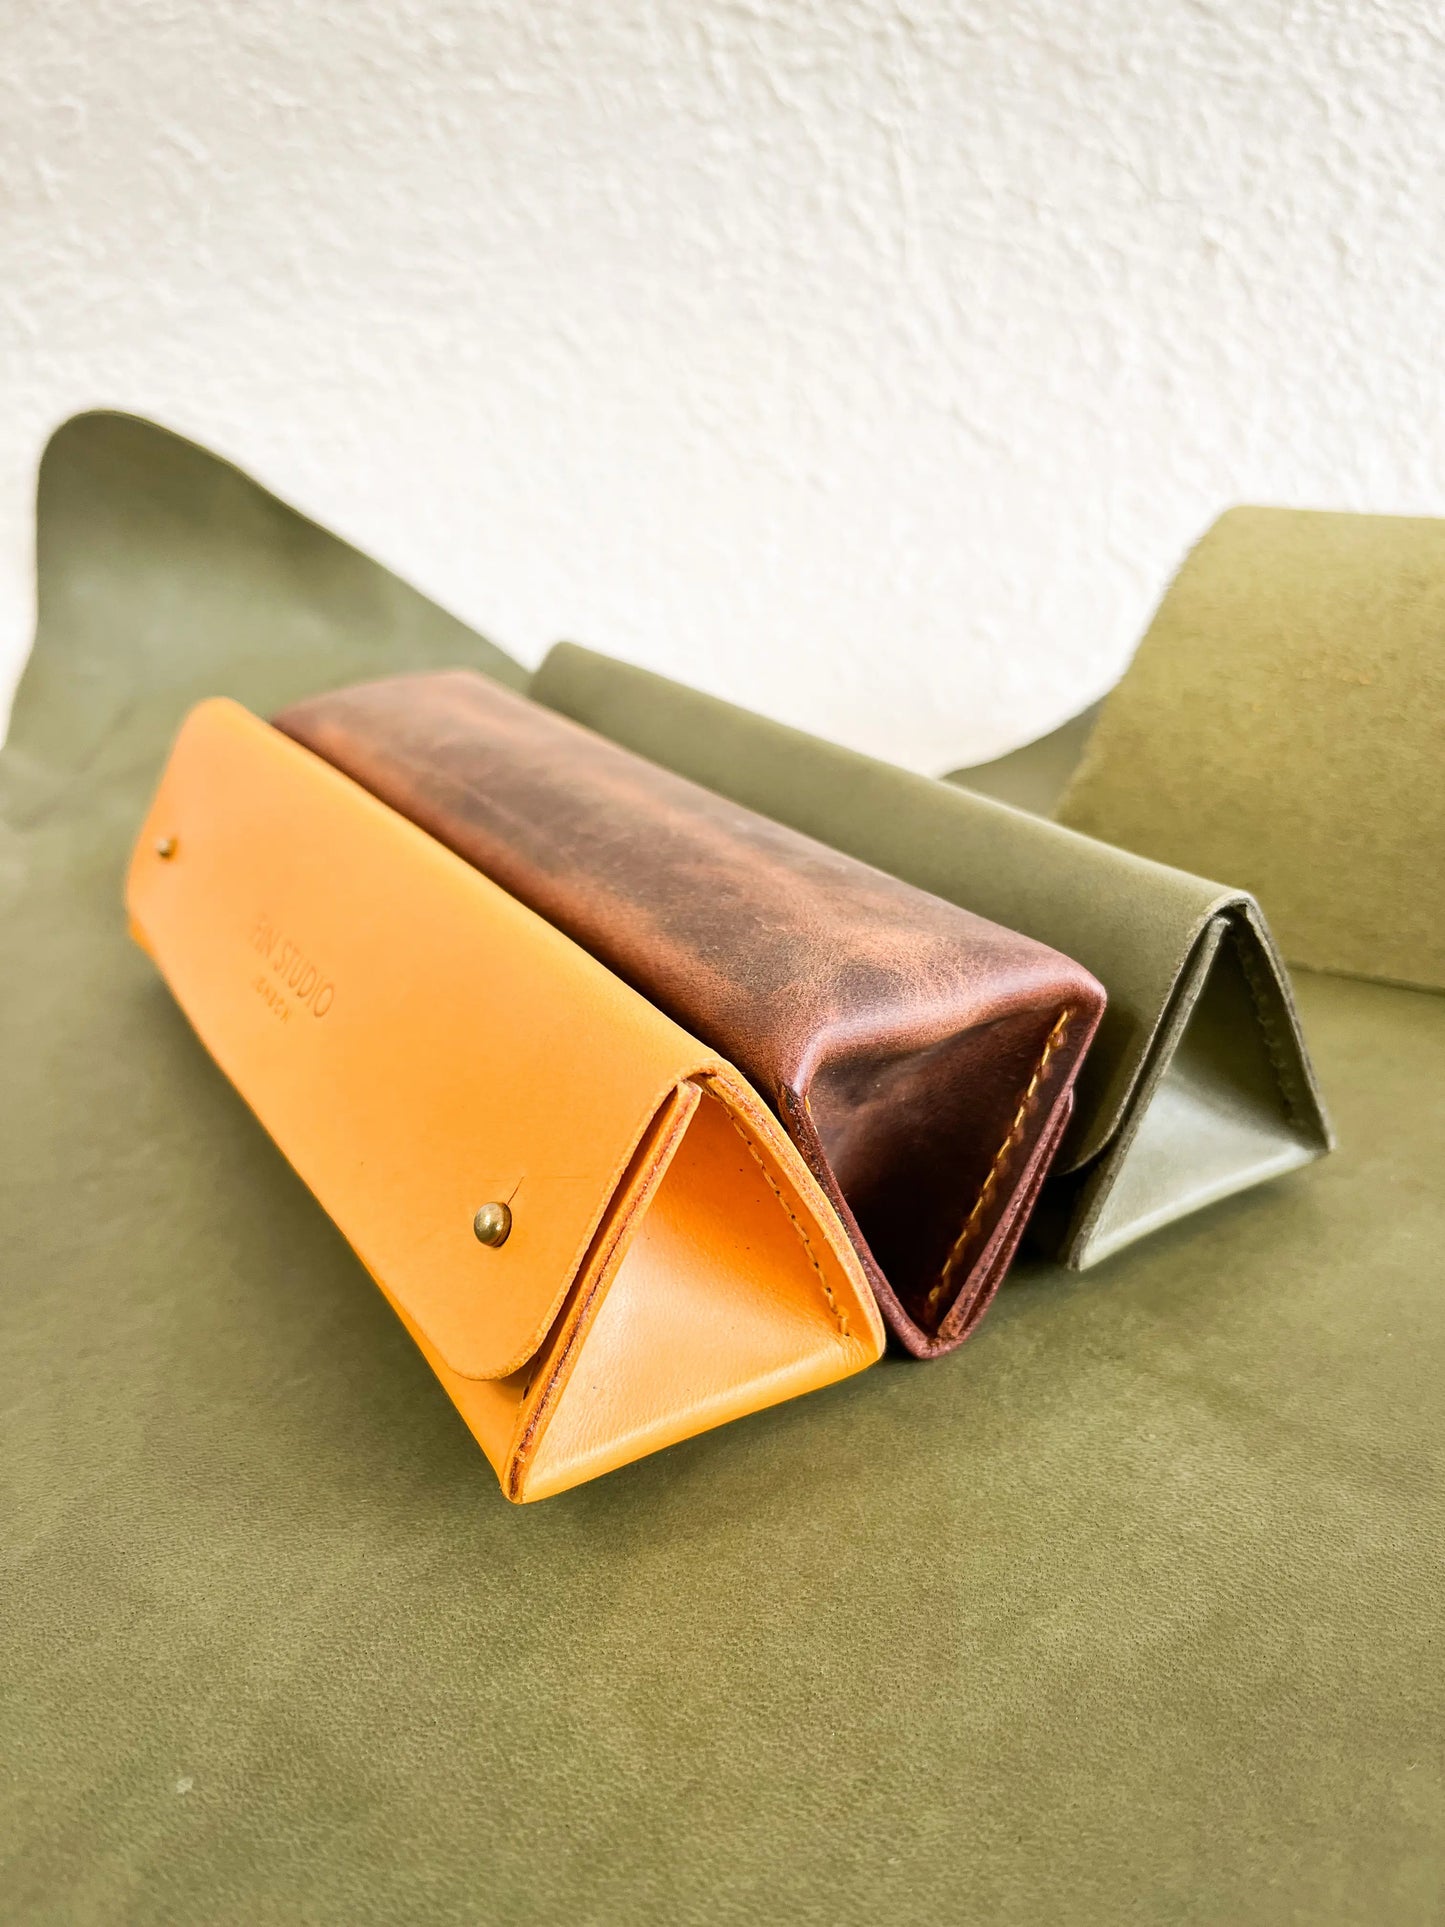 Fin Studio Leather pouch - Mustard